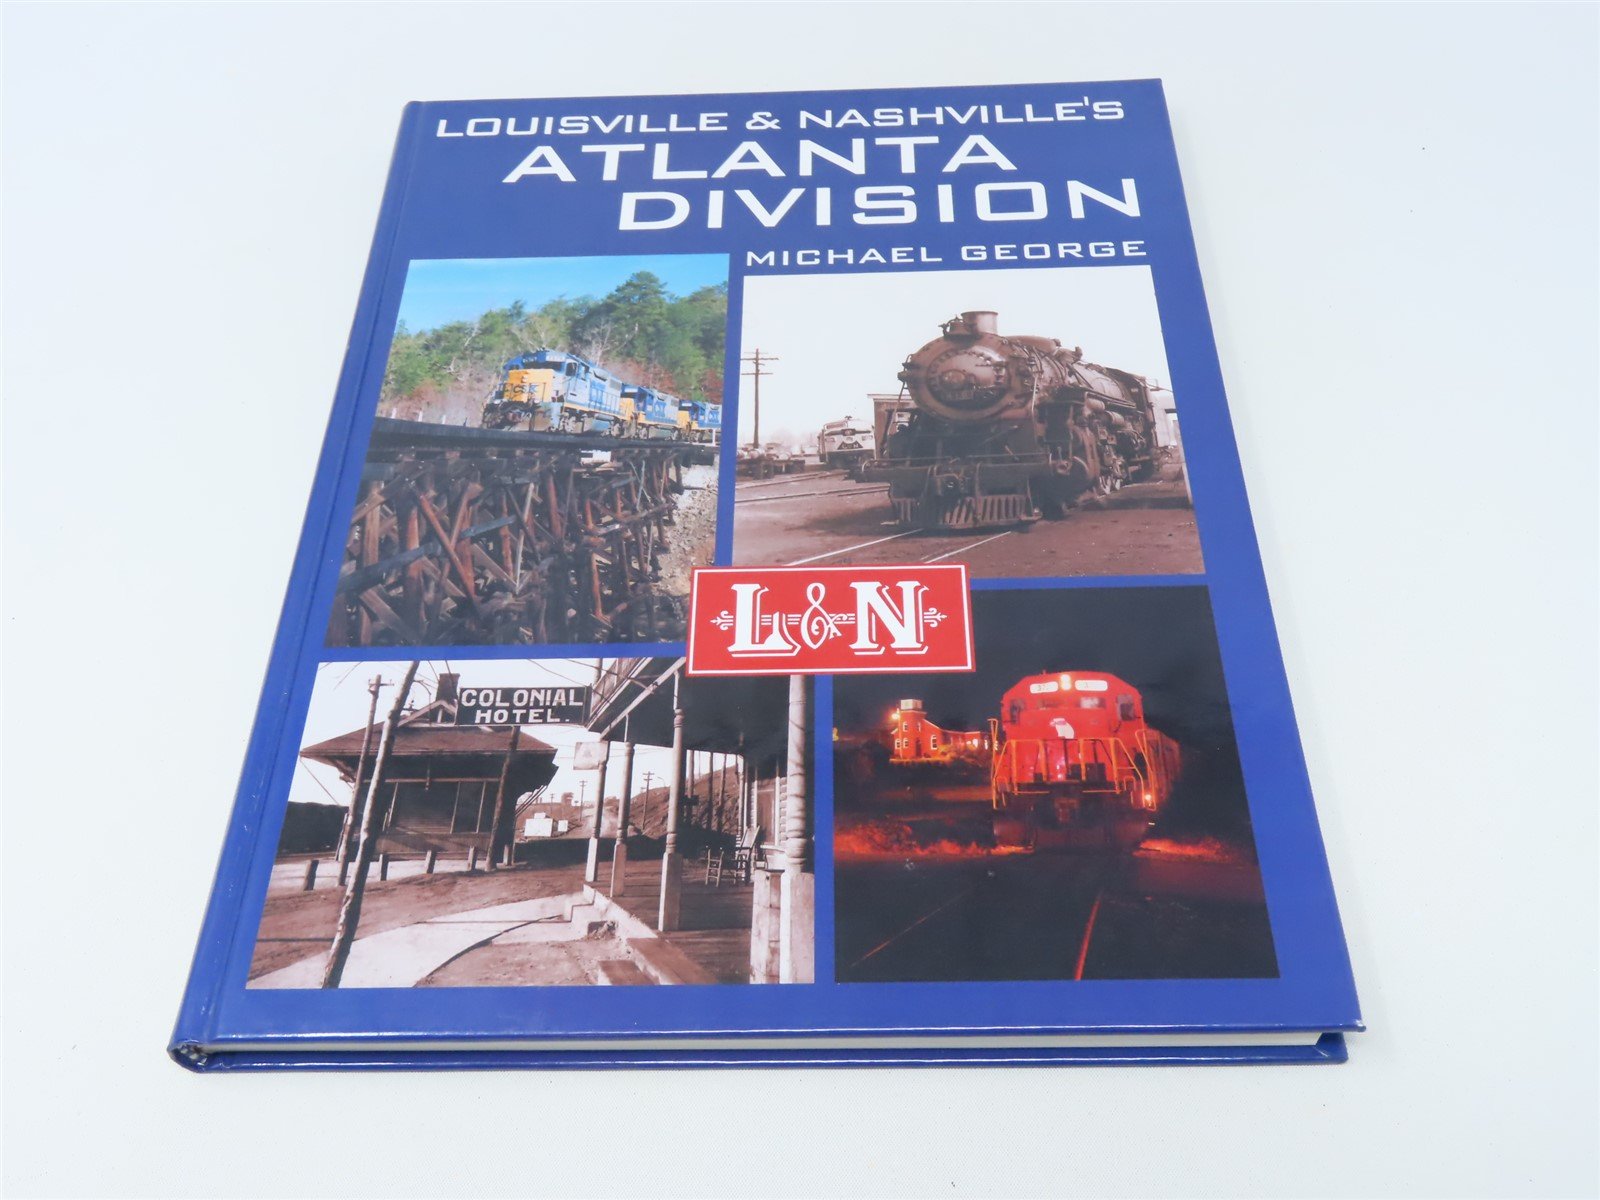 L&N Louisville & Nashville's Atlanta Division by Michael George ©2000 HC Book